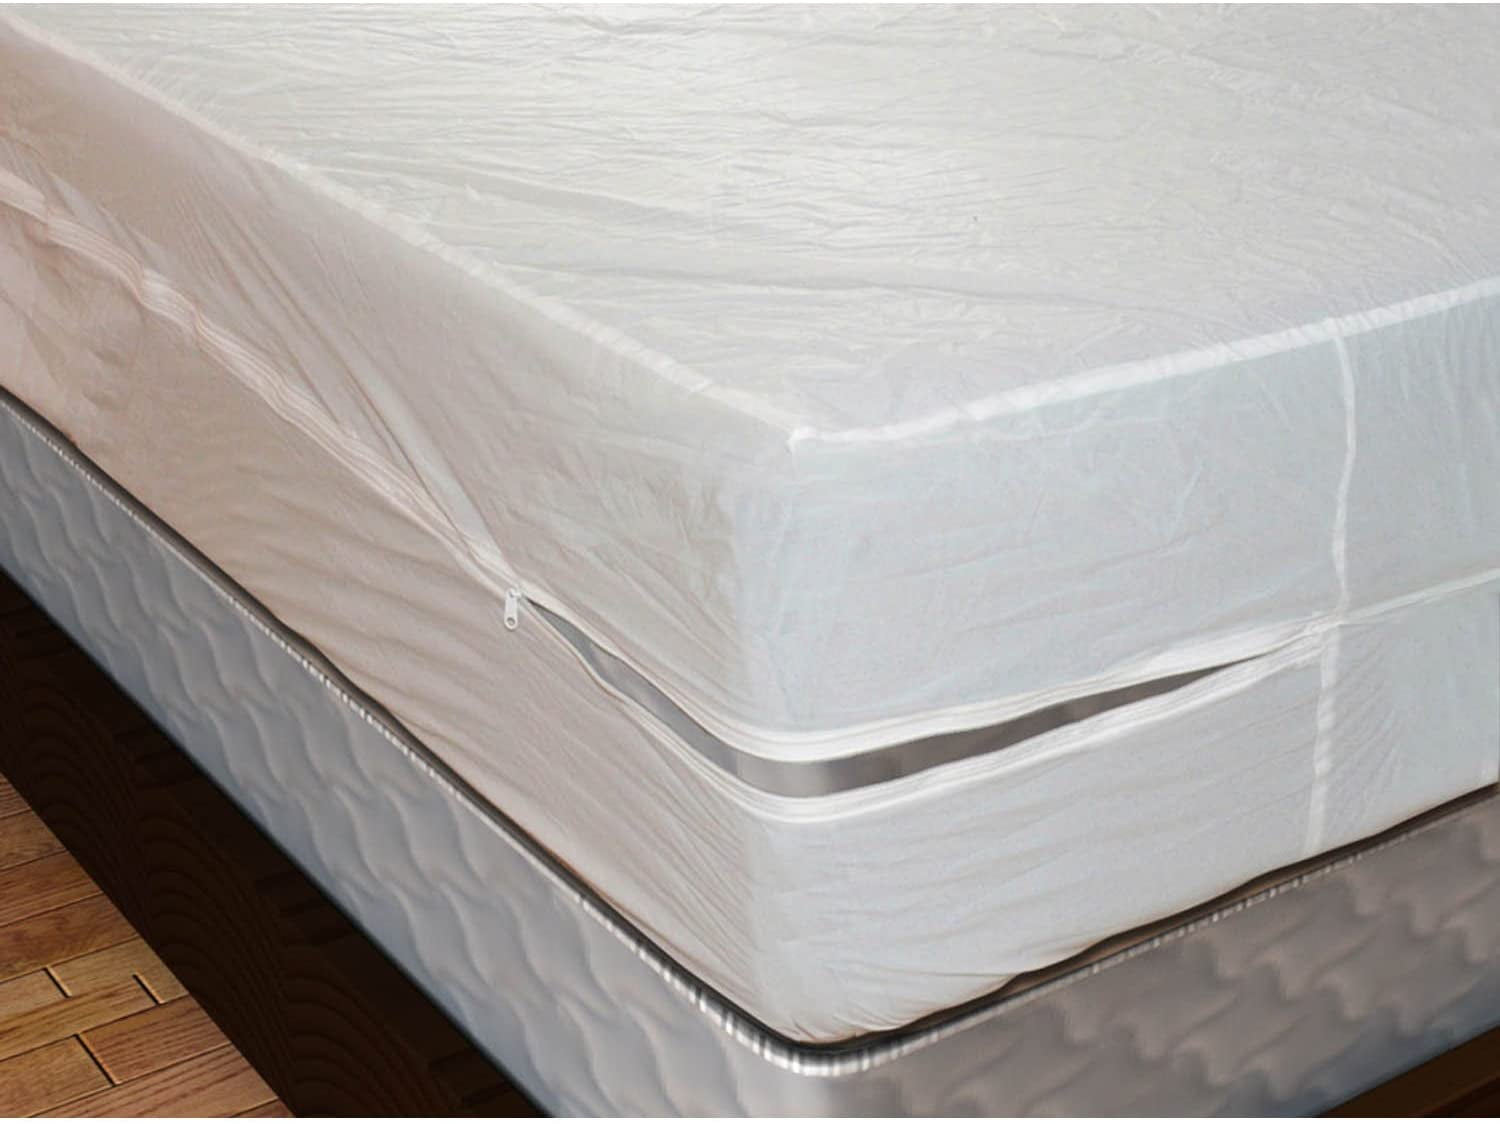 thick vinyl mattress cover